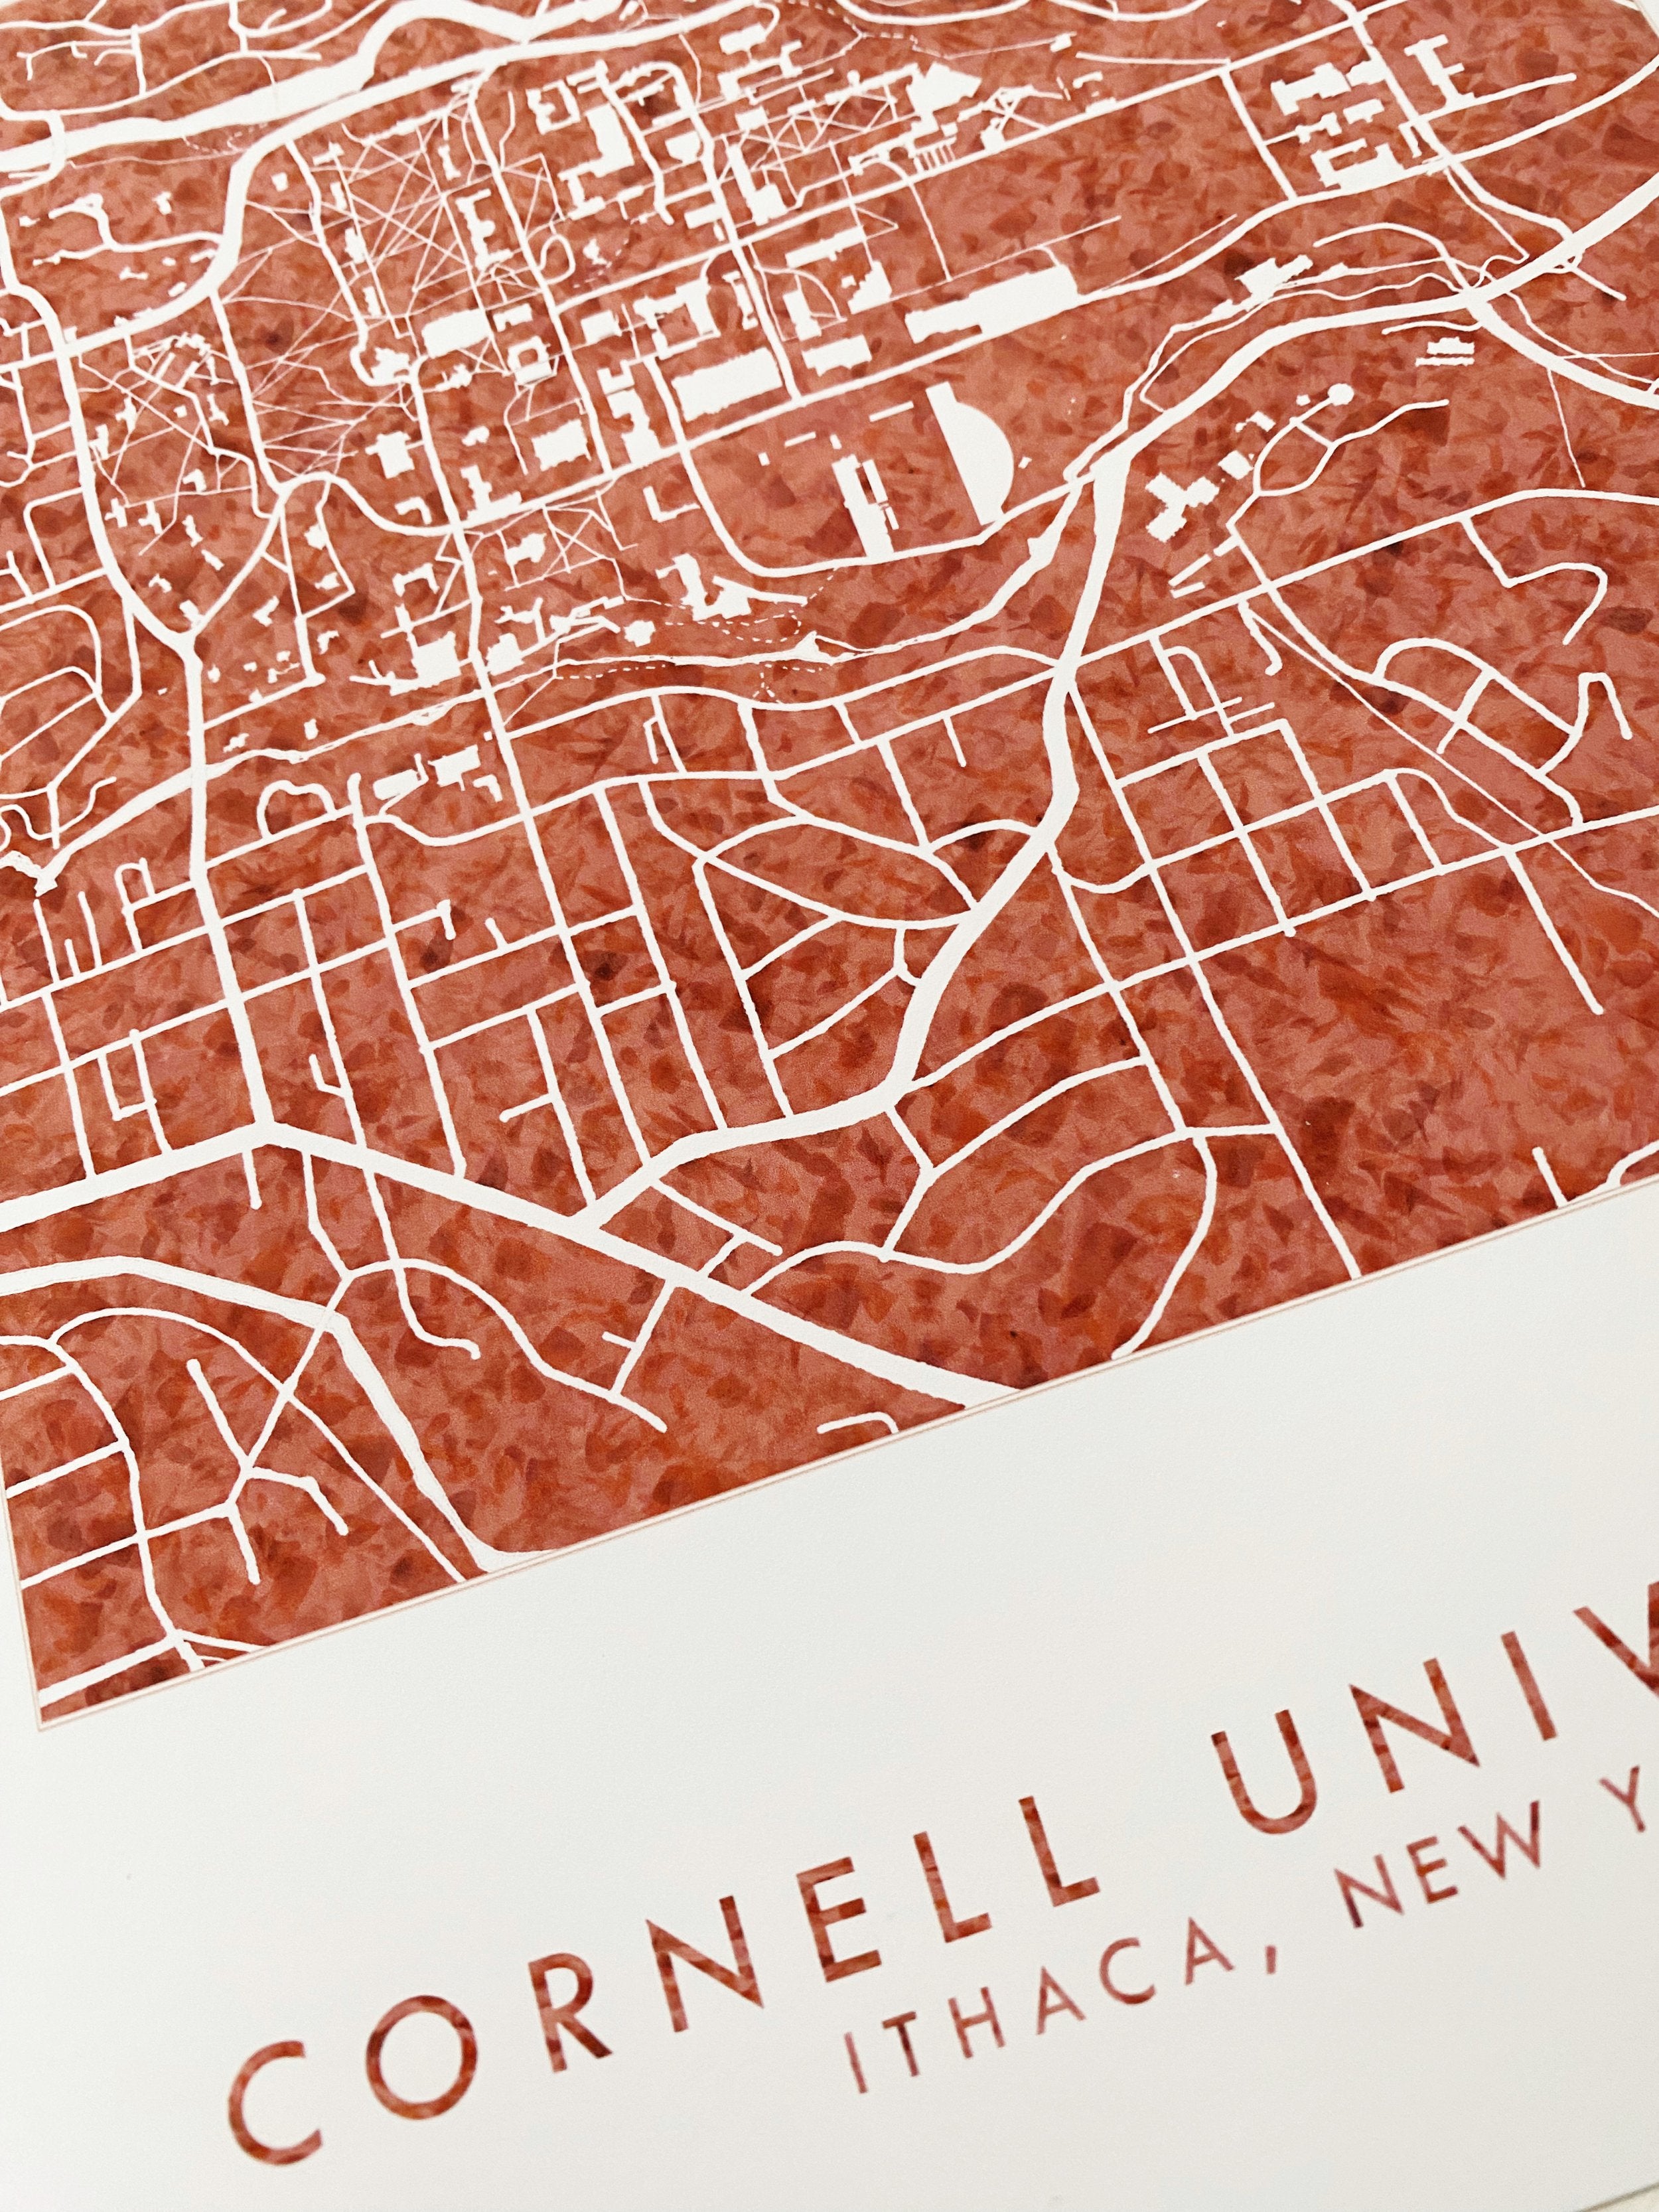 CORNELL UNIVERSITY Campus Watercolor Map: PRINT